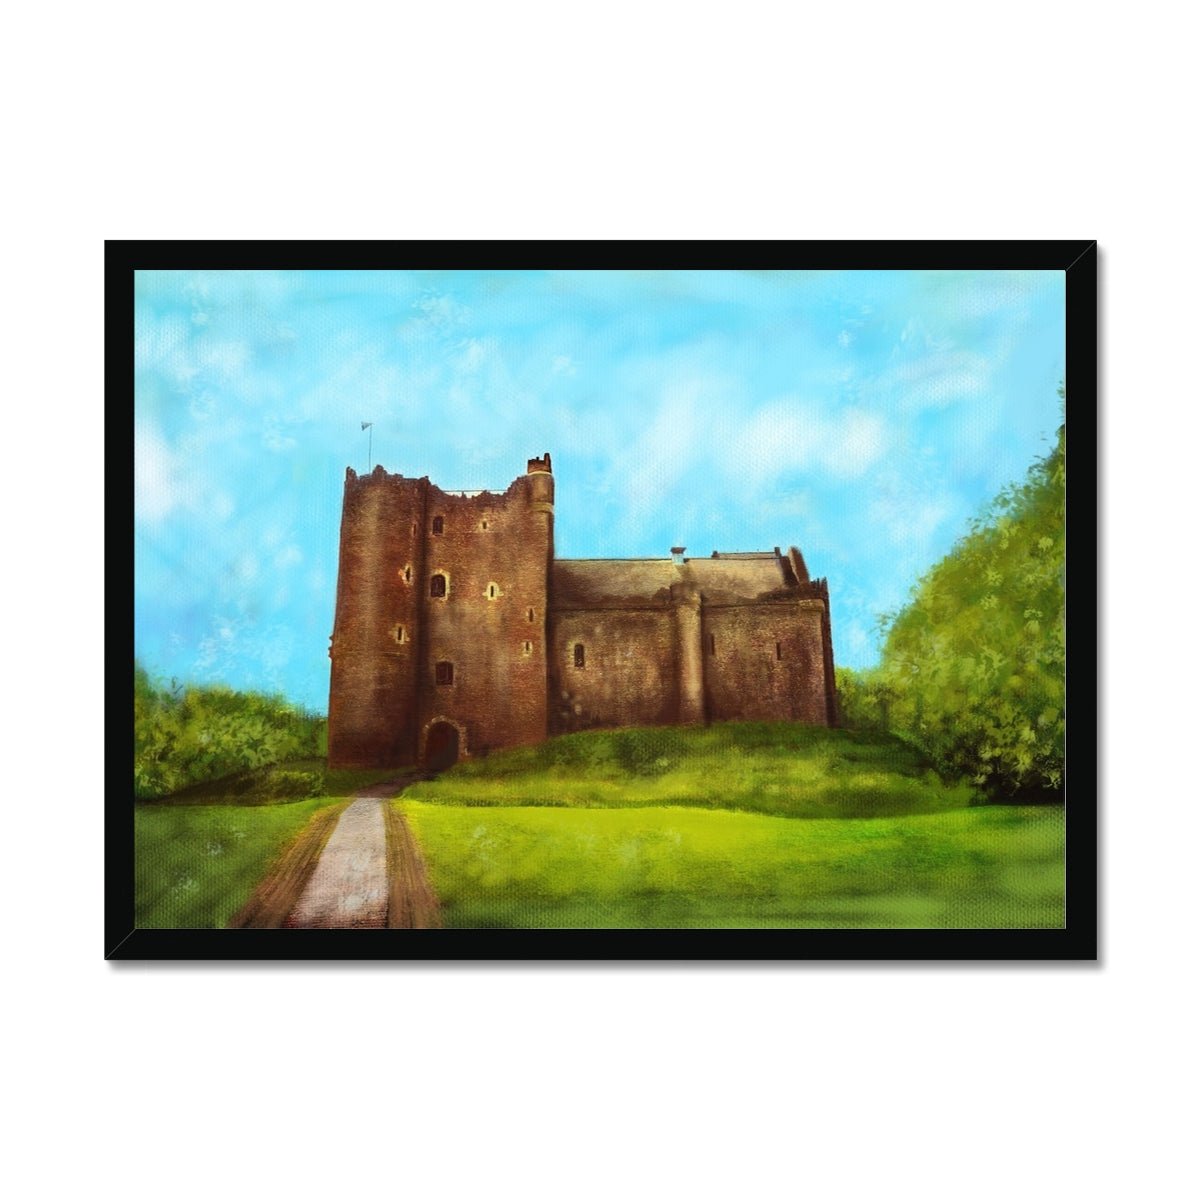 Doune Castle Painting | Framed Prints From Scotland-Framed Prints-Scottish Castles Art Gallery-A2 Landscape-Black Frame-Paintings, Prints, Homeware, Art Gifts From Scotland By Scottish Artist Kevin Hunter